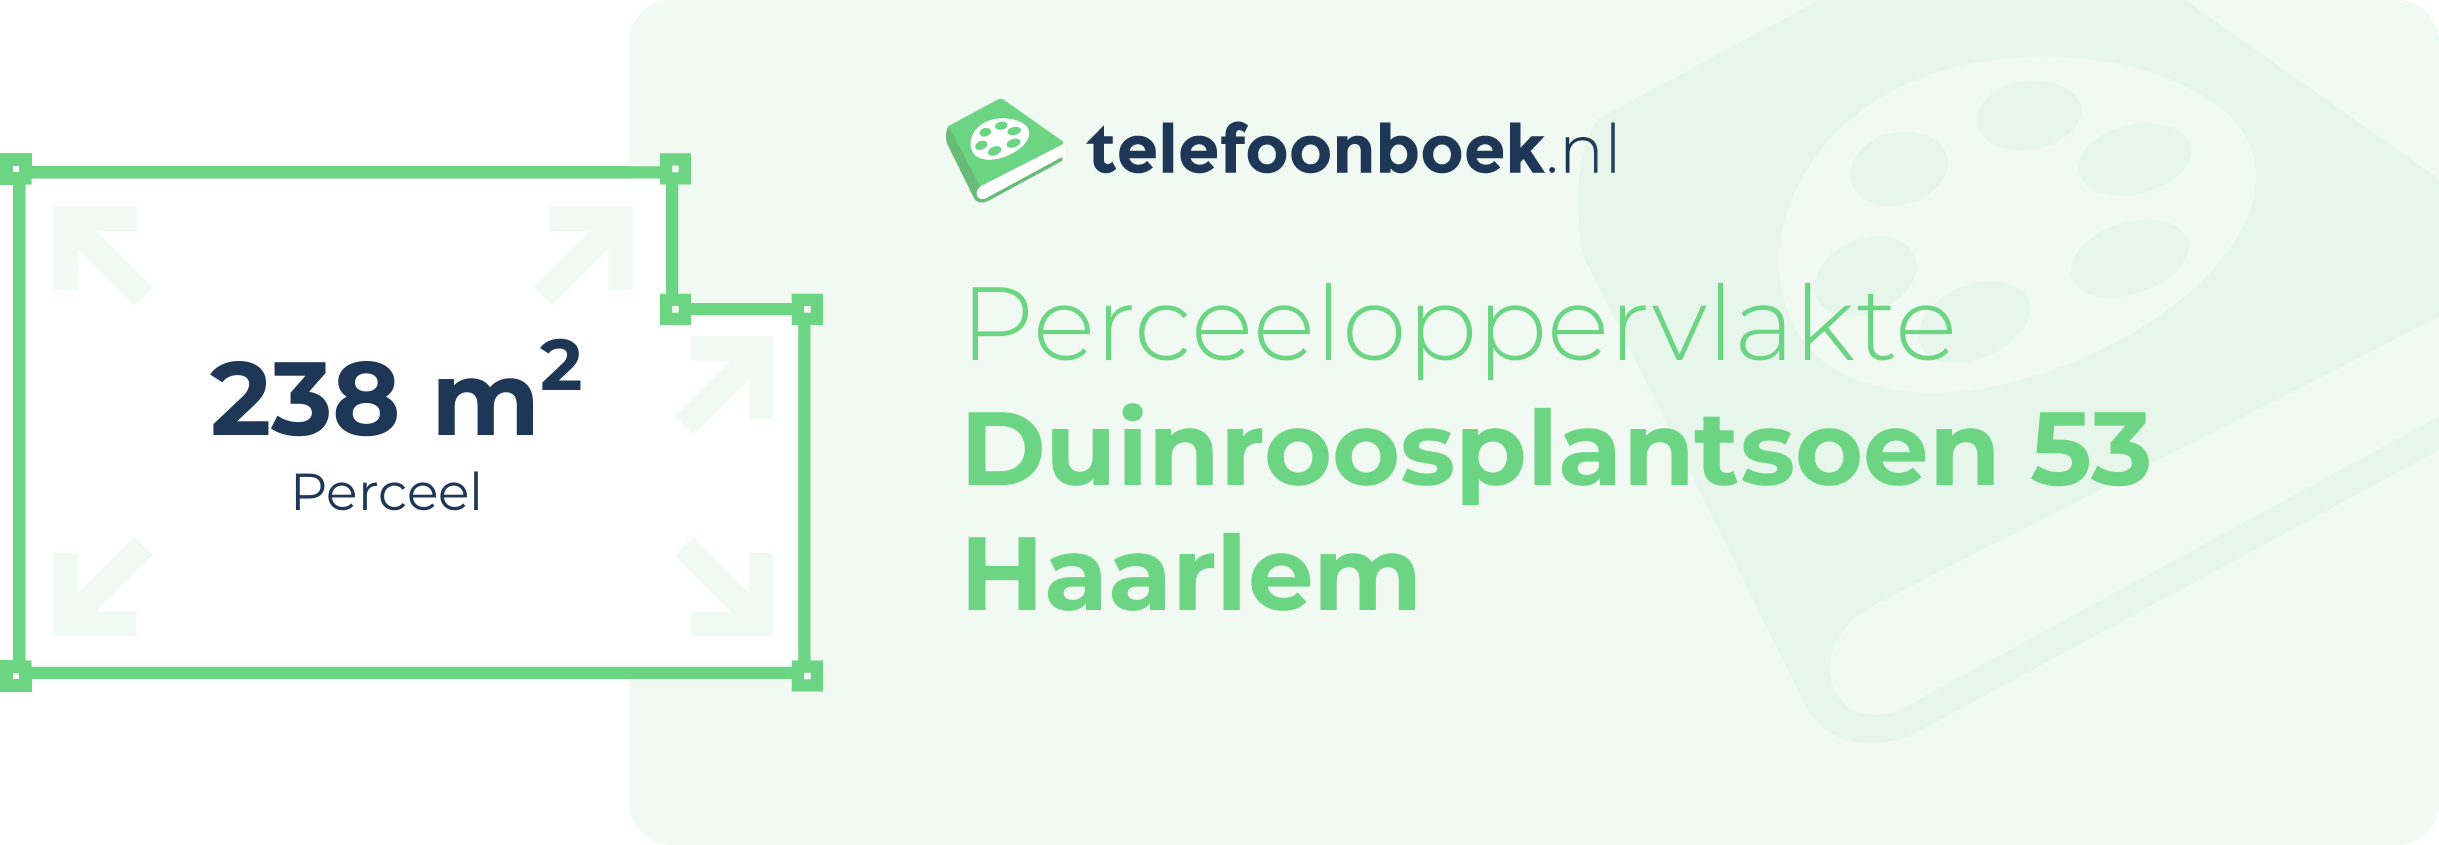 Perceeloppervlakte Duinroosplantsoen 53 Haarlem